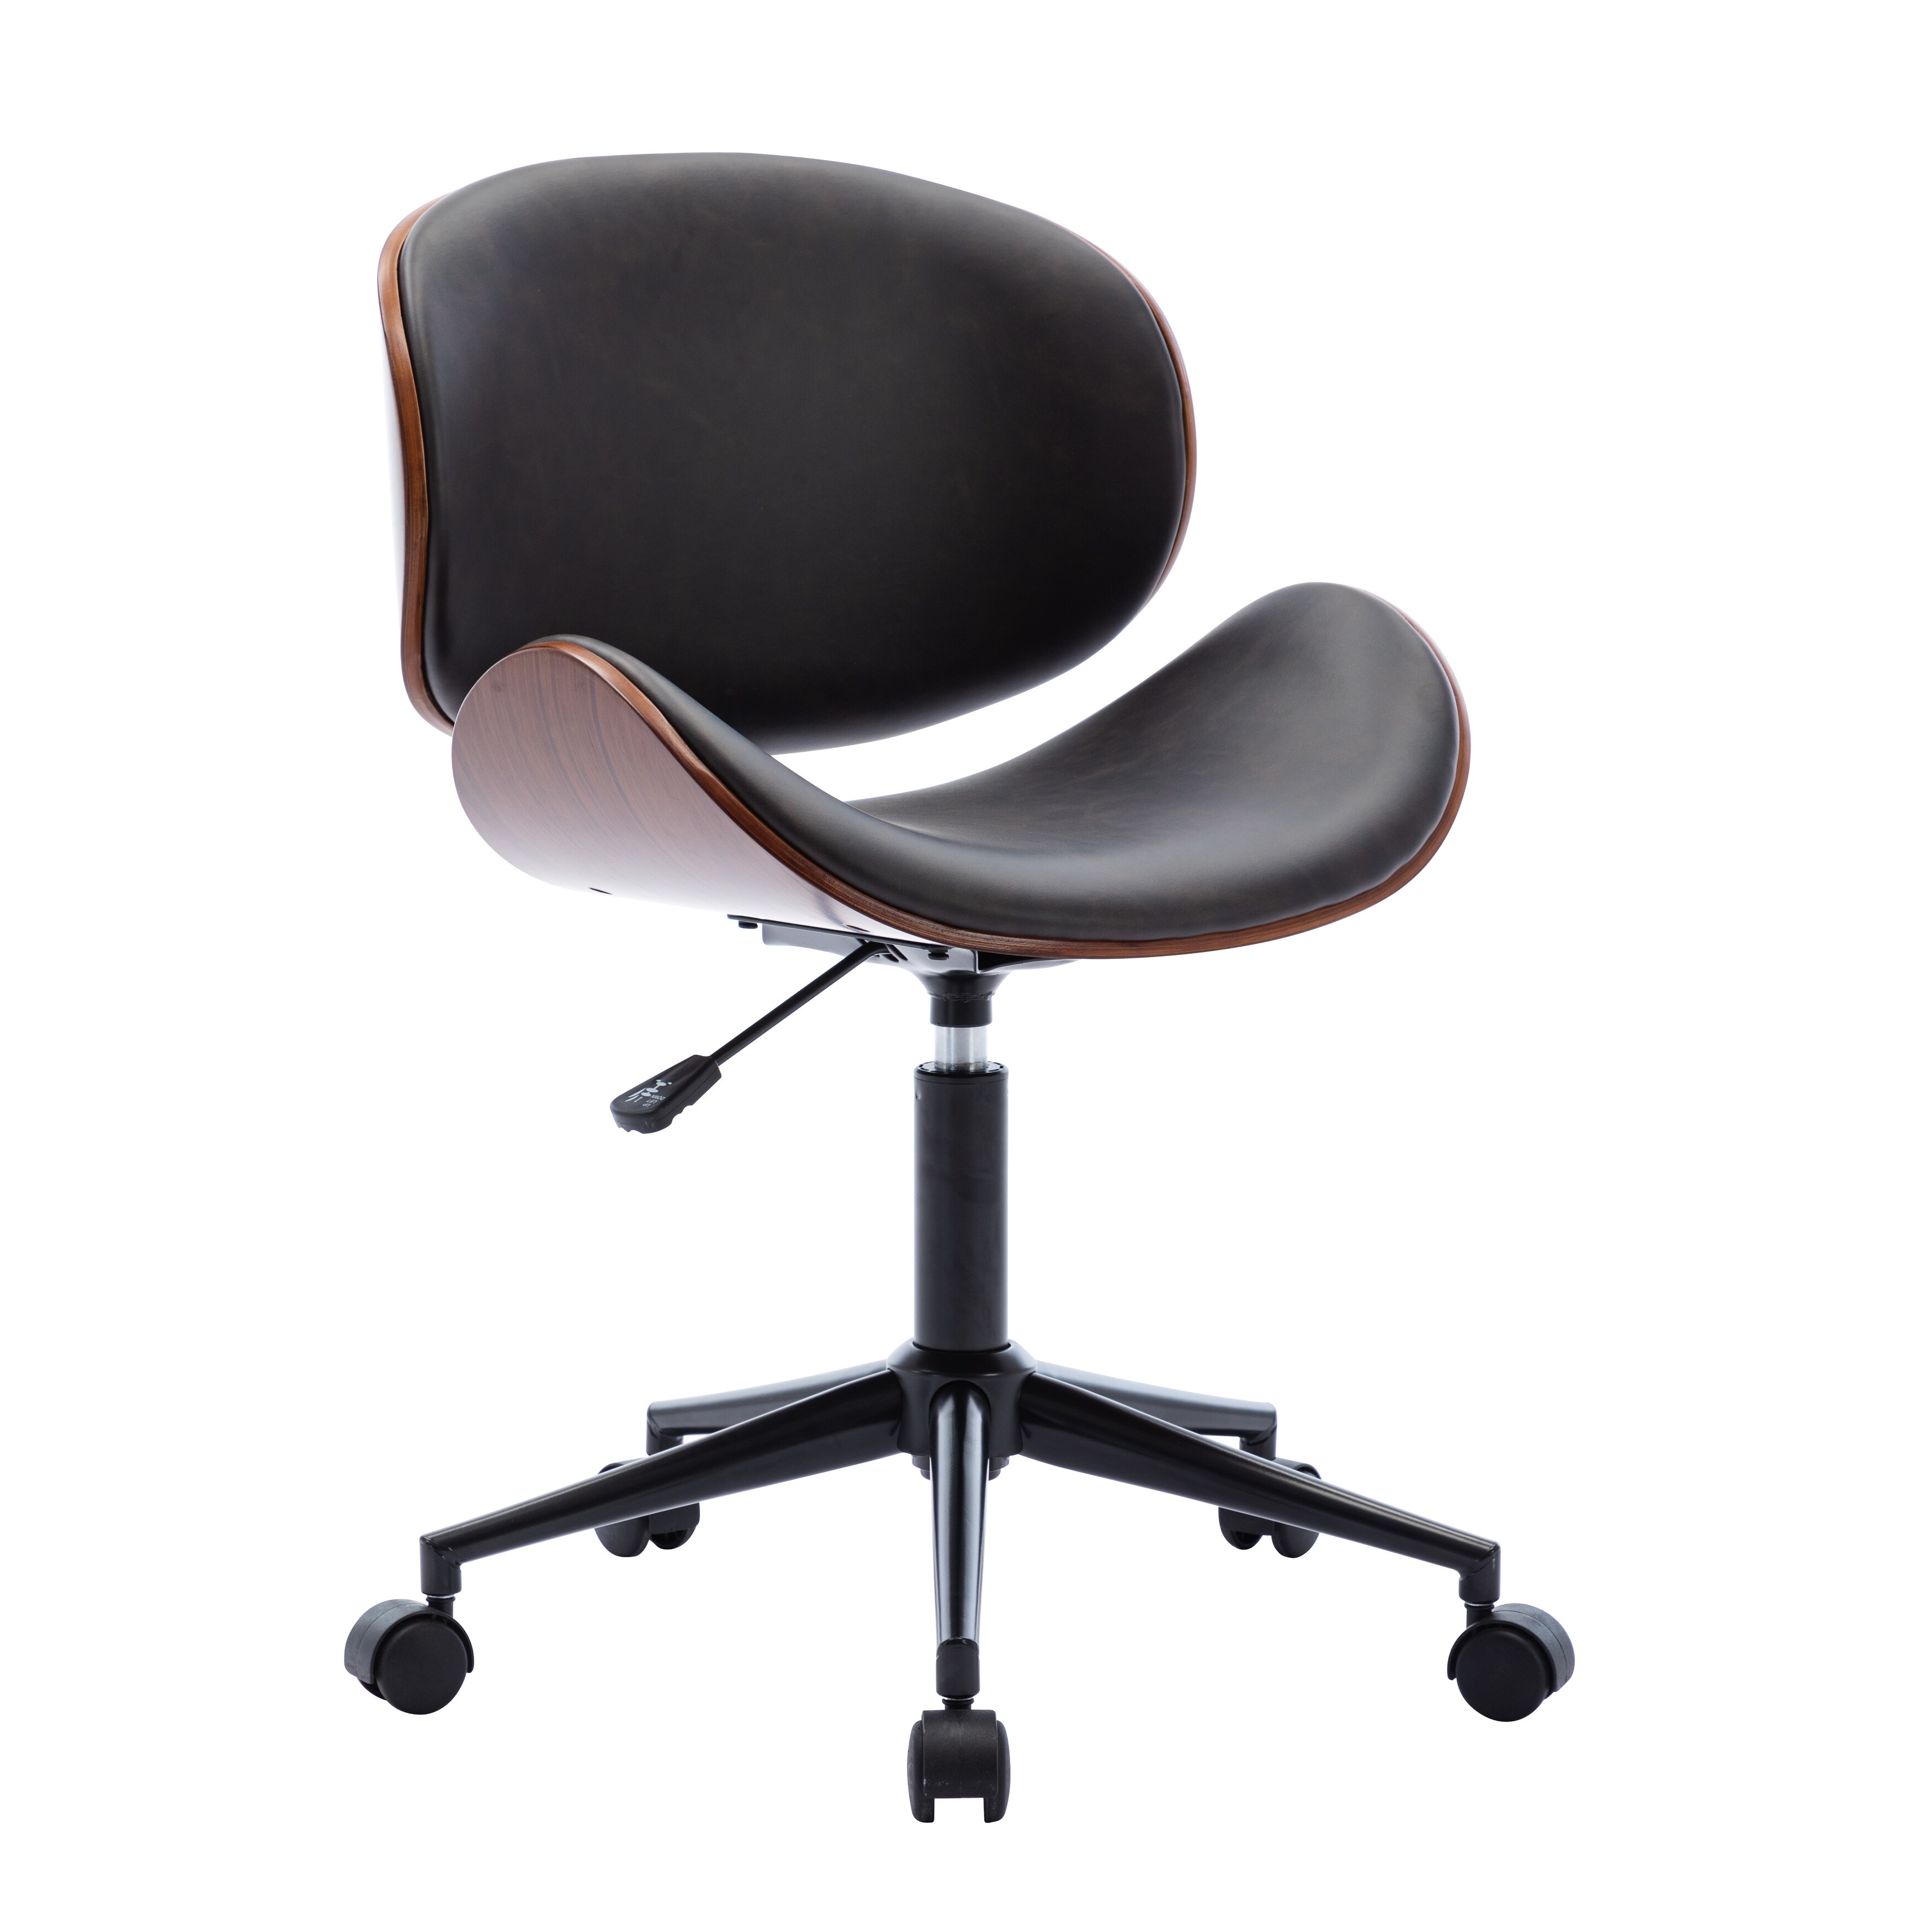 TiramisuBest Ergonomic Adjustable PU Leather Office Chair with U-type Backrest, Black